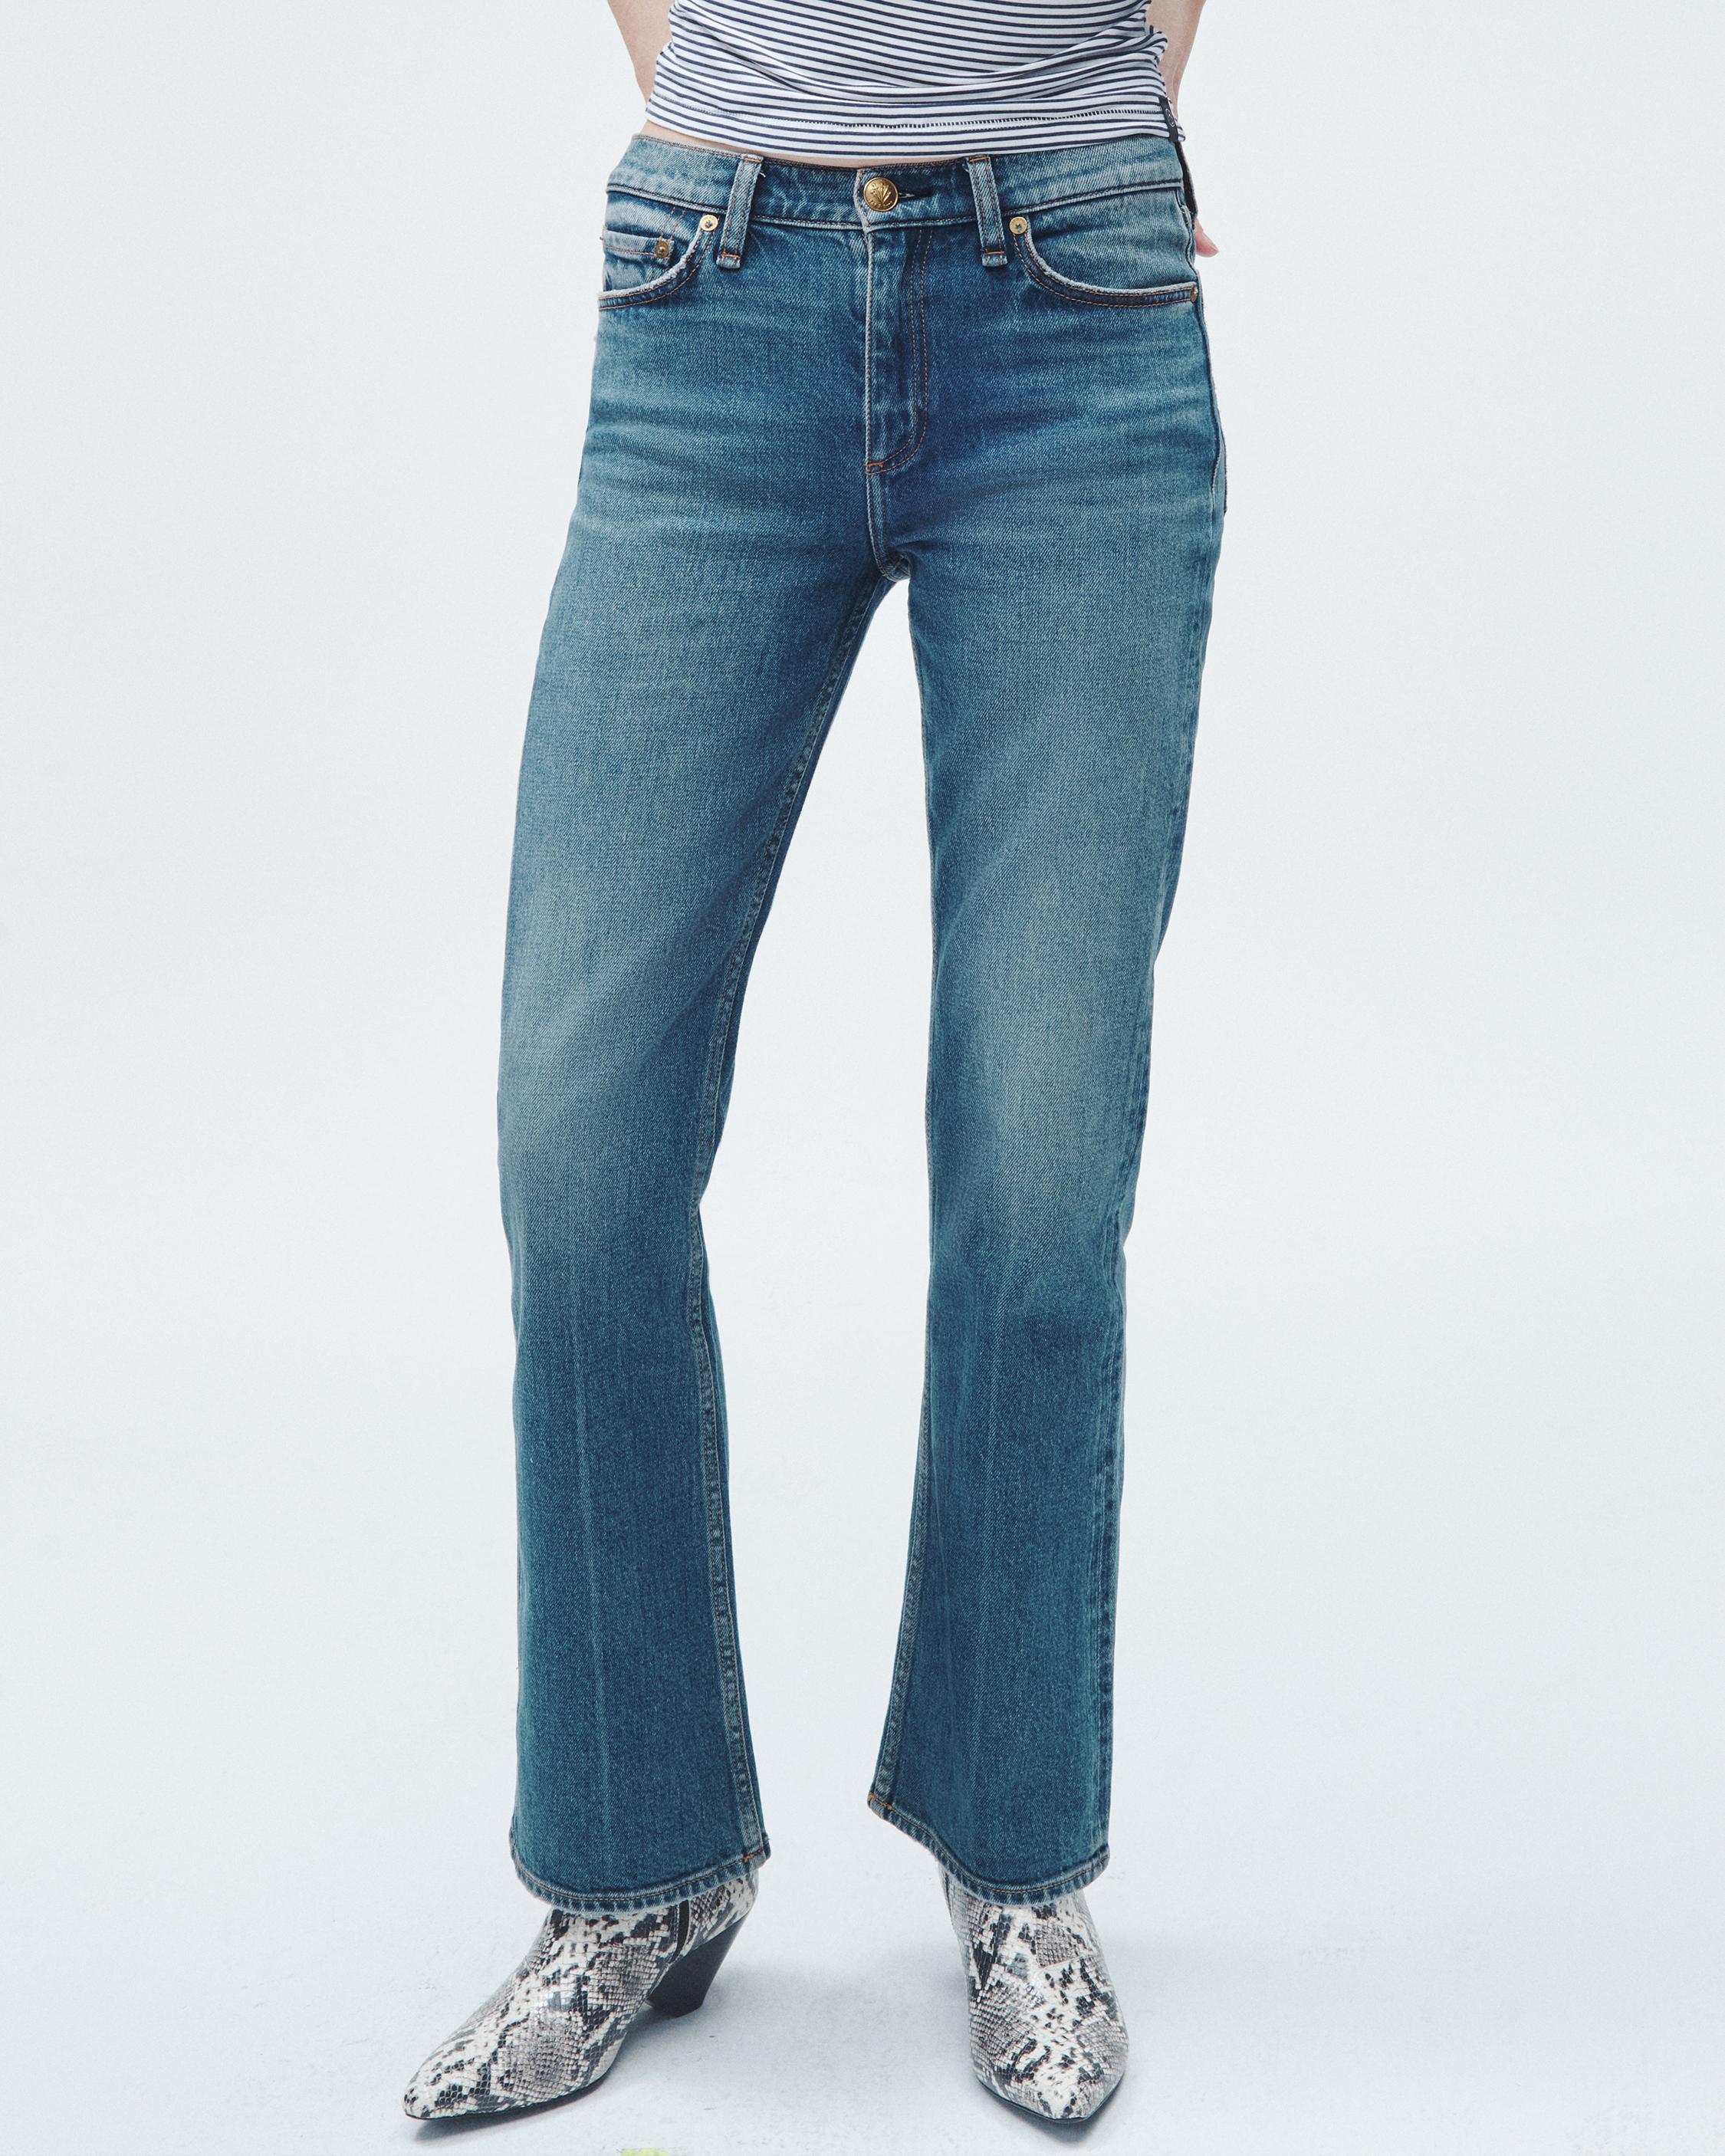 Vintage Stretch Denim Jeans Women Boot Cut Flare Pants Wide Leg